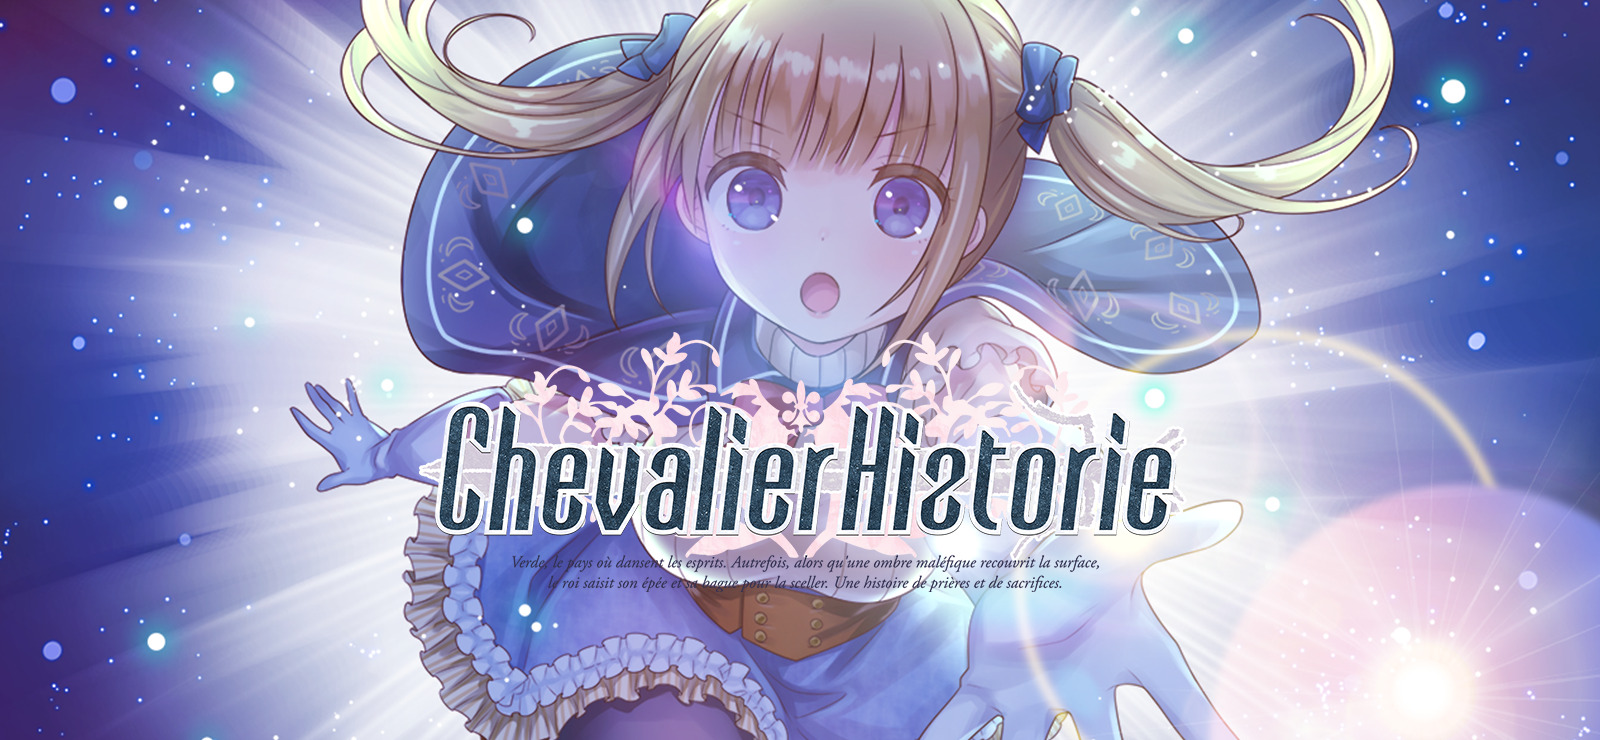 Chevalier Historie Append - Kagura Games